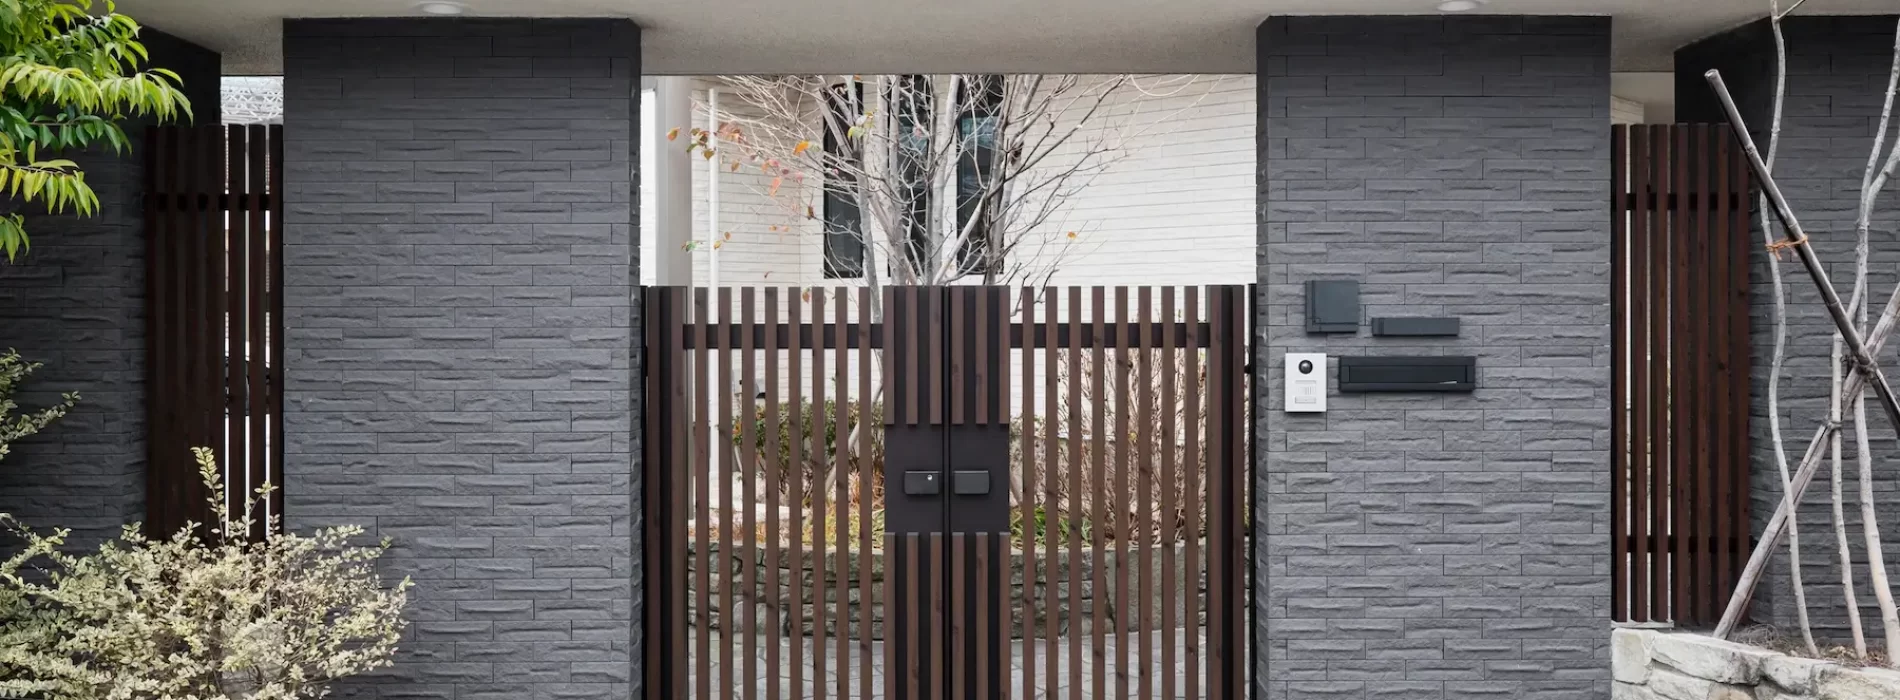 japanese-house-entrance-with-fence_23-2149301041.jpg